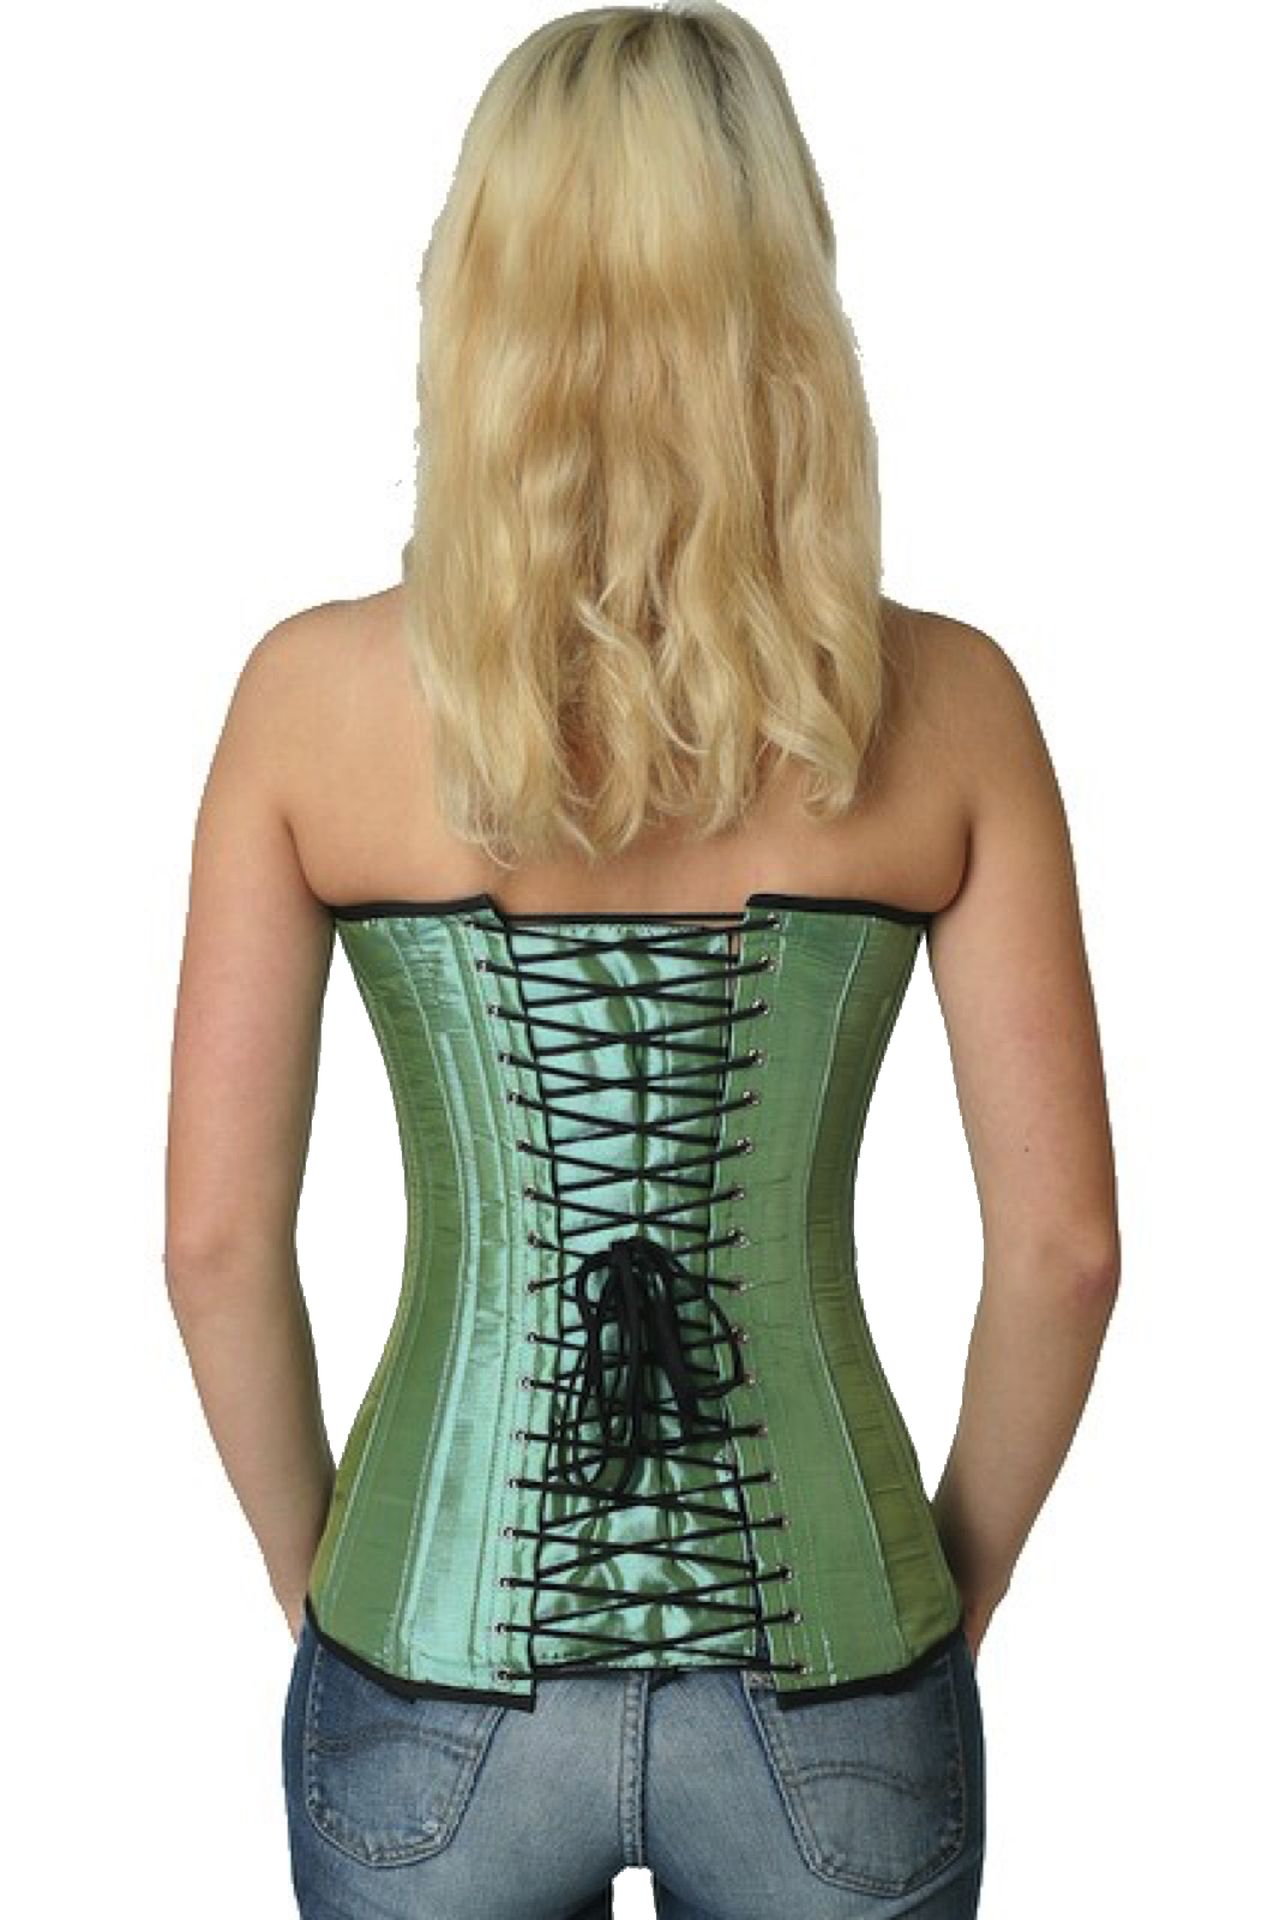 Satijn corset lichtgroen volborst Korset sy15